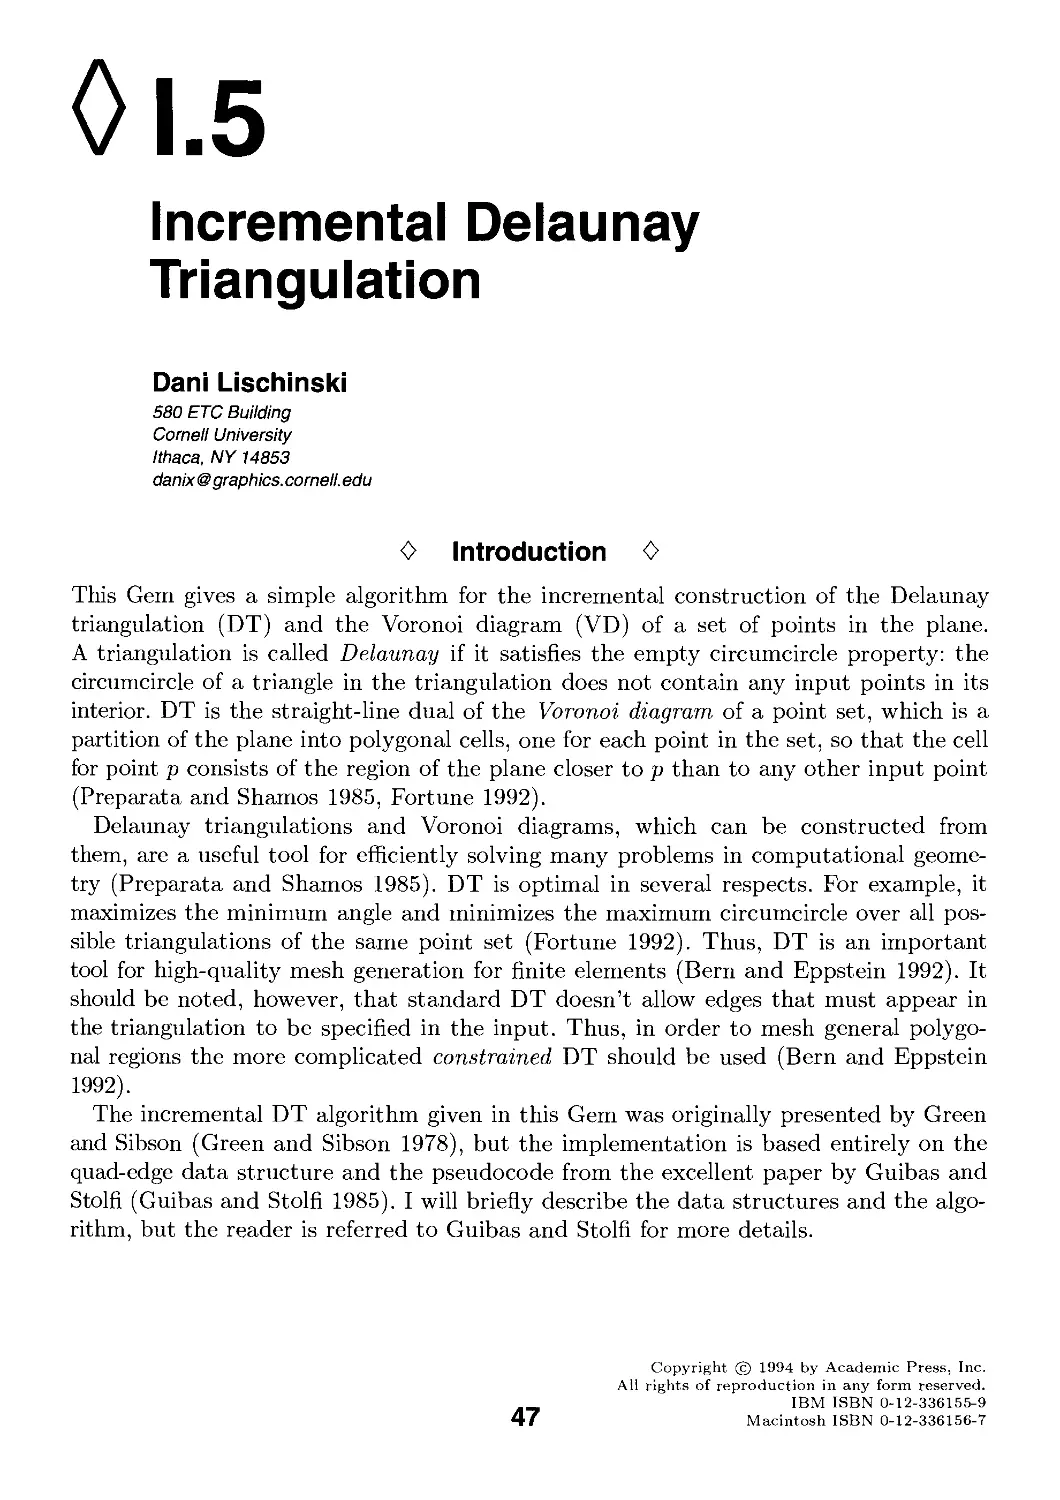 I.5. Incremental Delaunay Triangulation by Dani Lischinsl<i